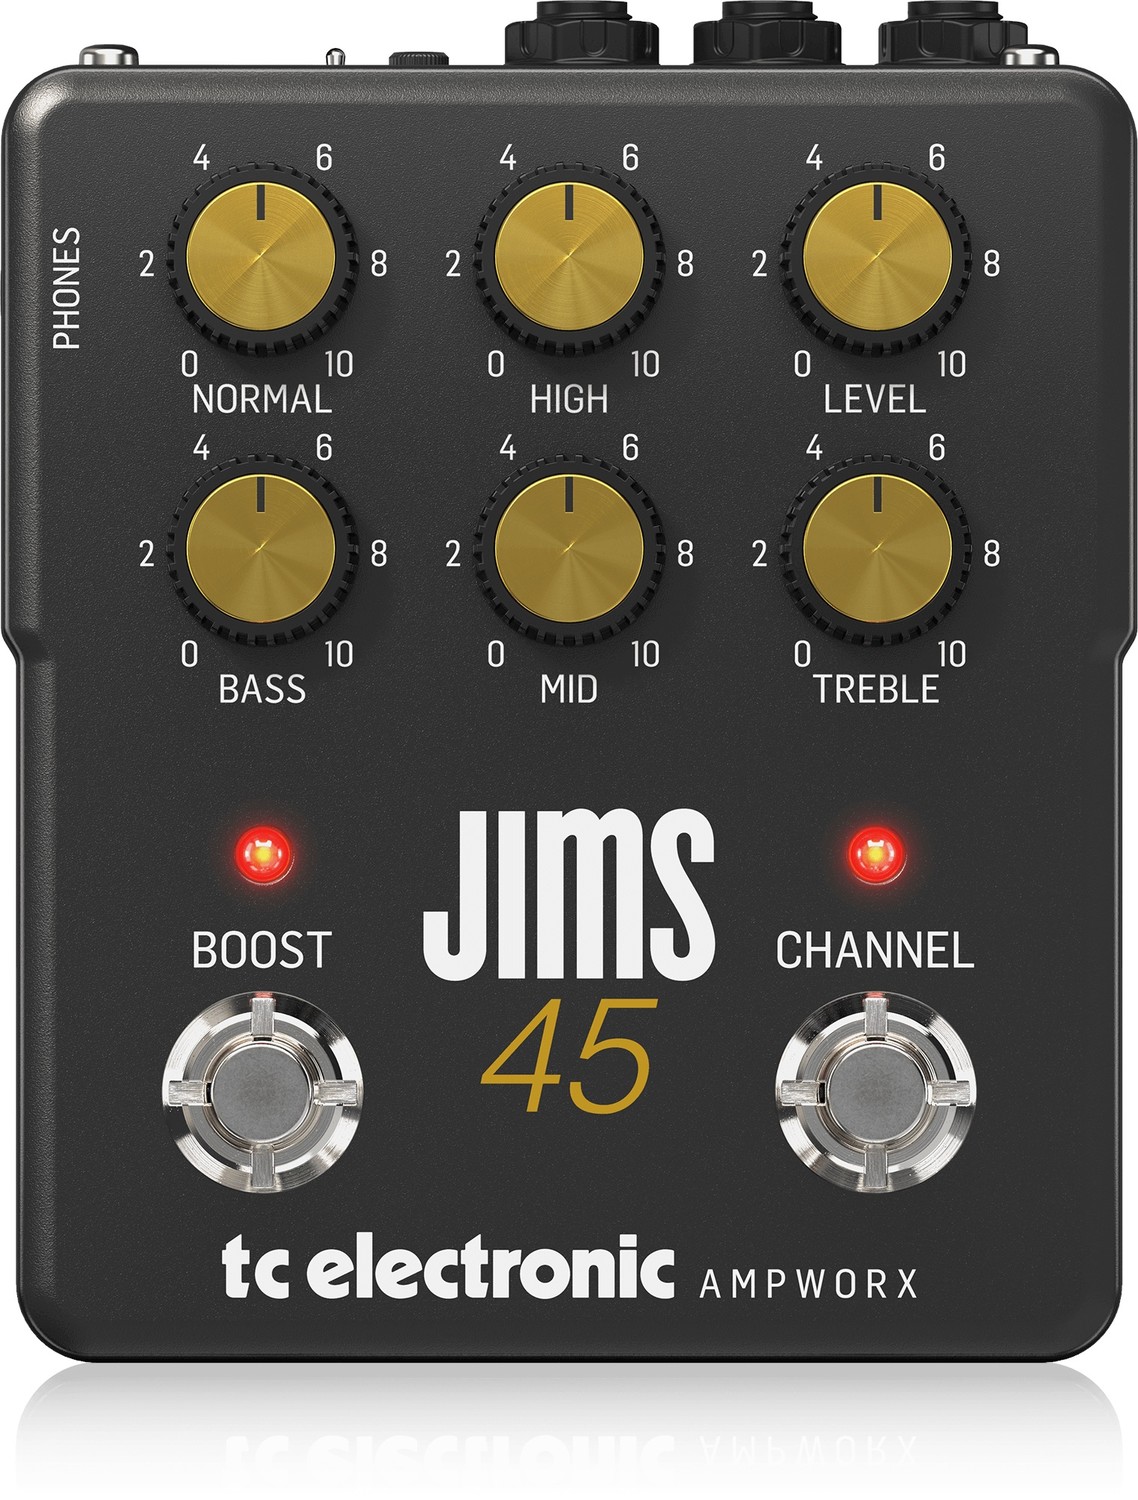 tc electronic JIMS 45 Preamp